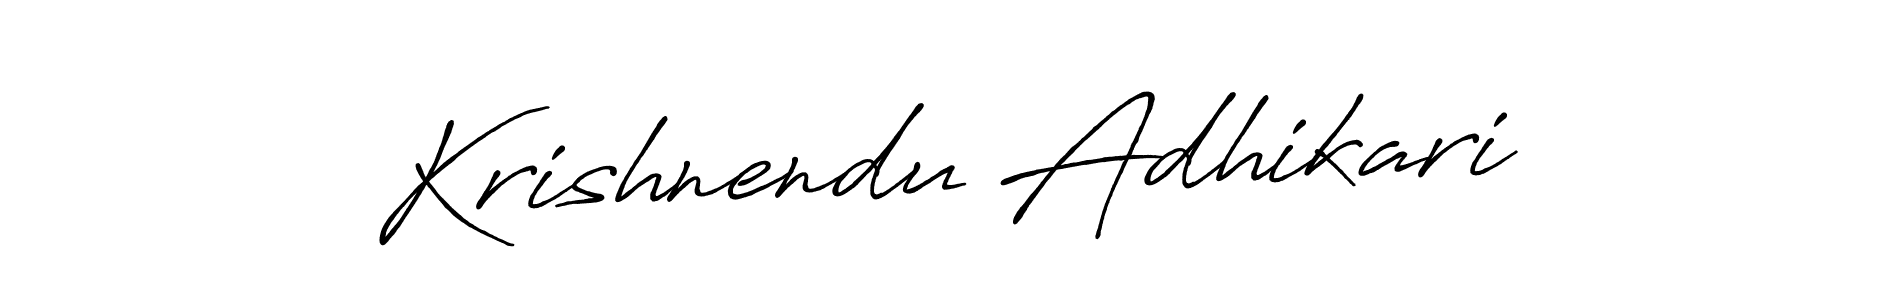 How to Draw Krishnendu Adhikari signature style? Antro_Vectra_Bolder is a latest design signature styles for name Krishnendu Adhikari. Krishnendu Adhikari signature style 7 images and pictures png